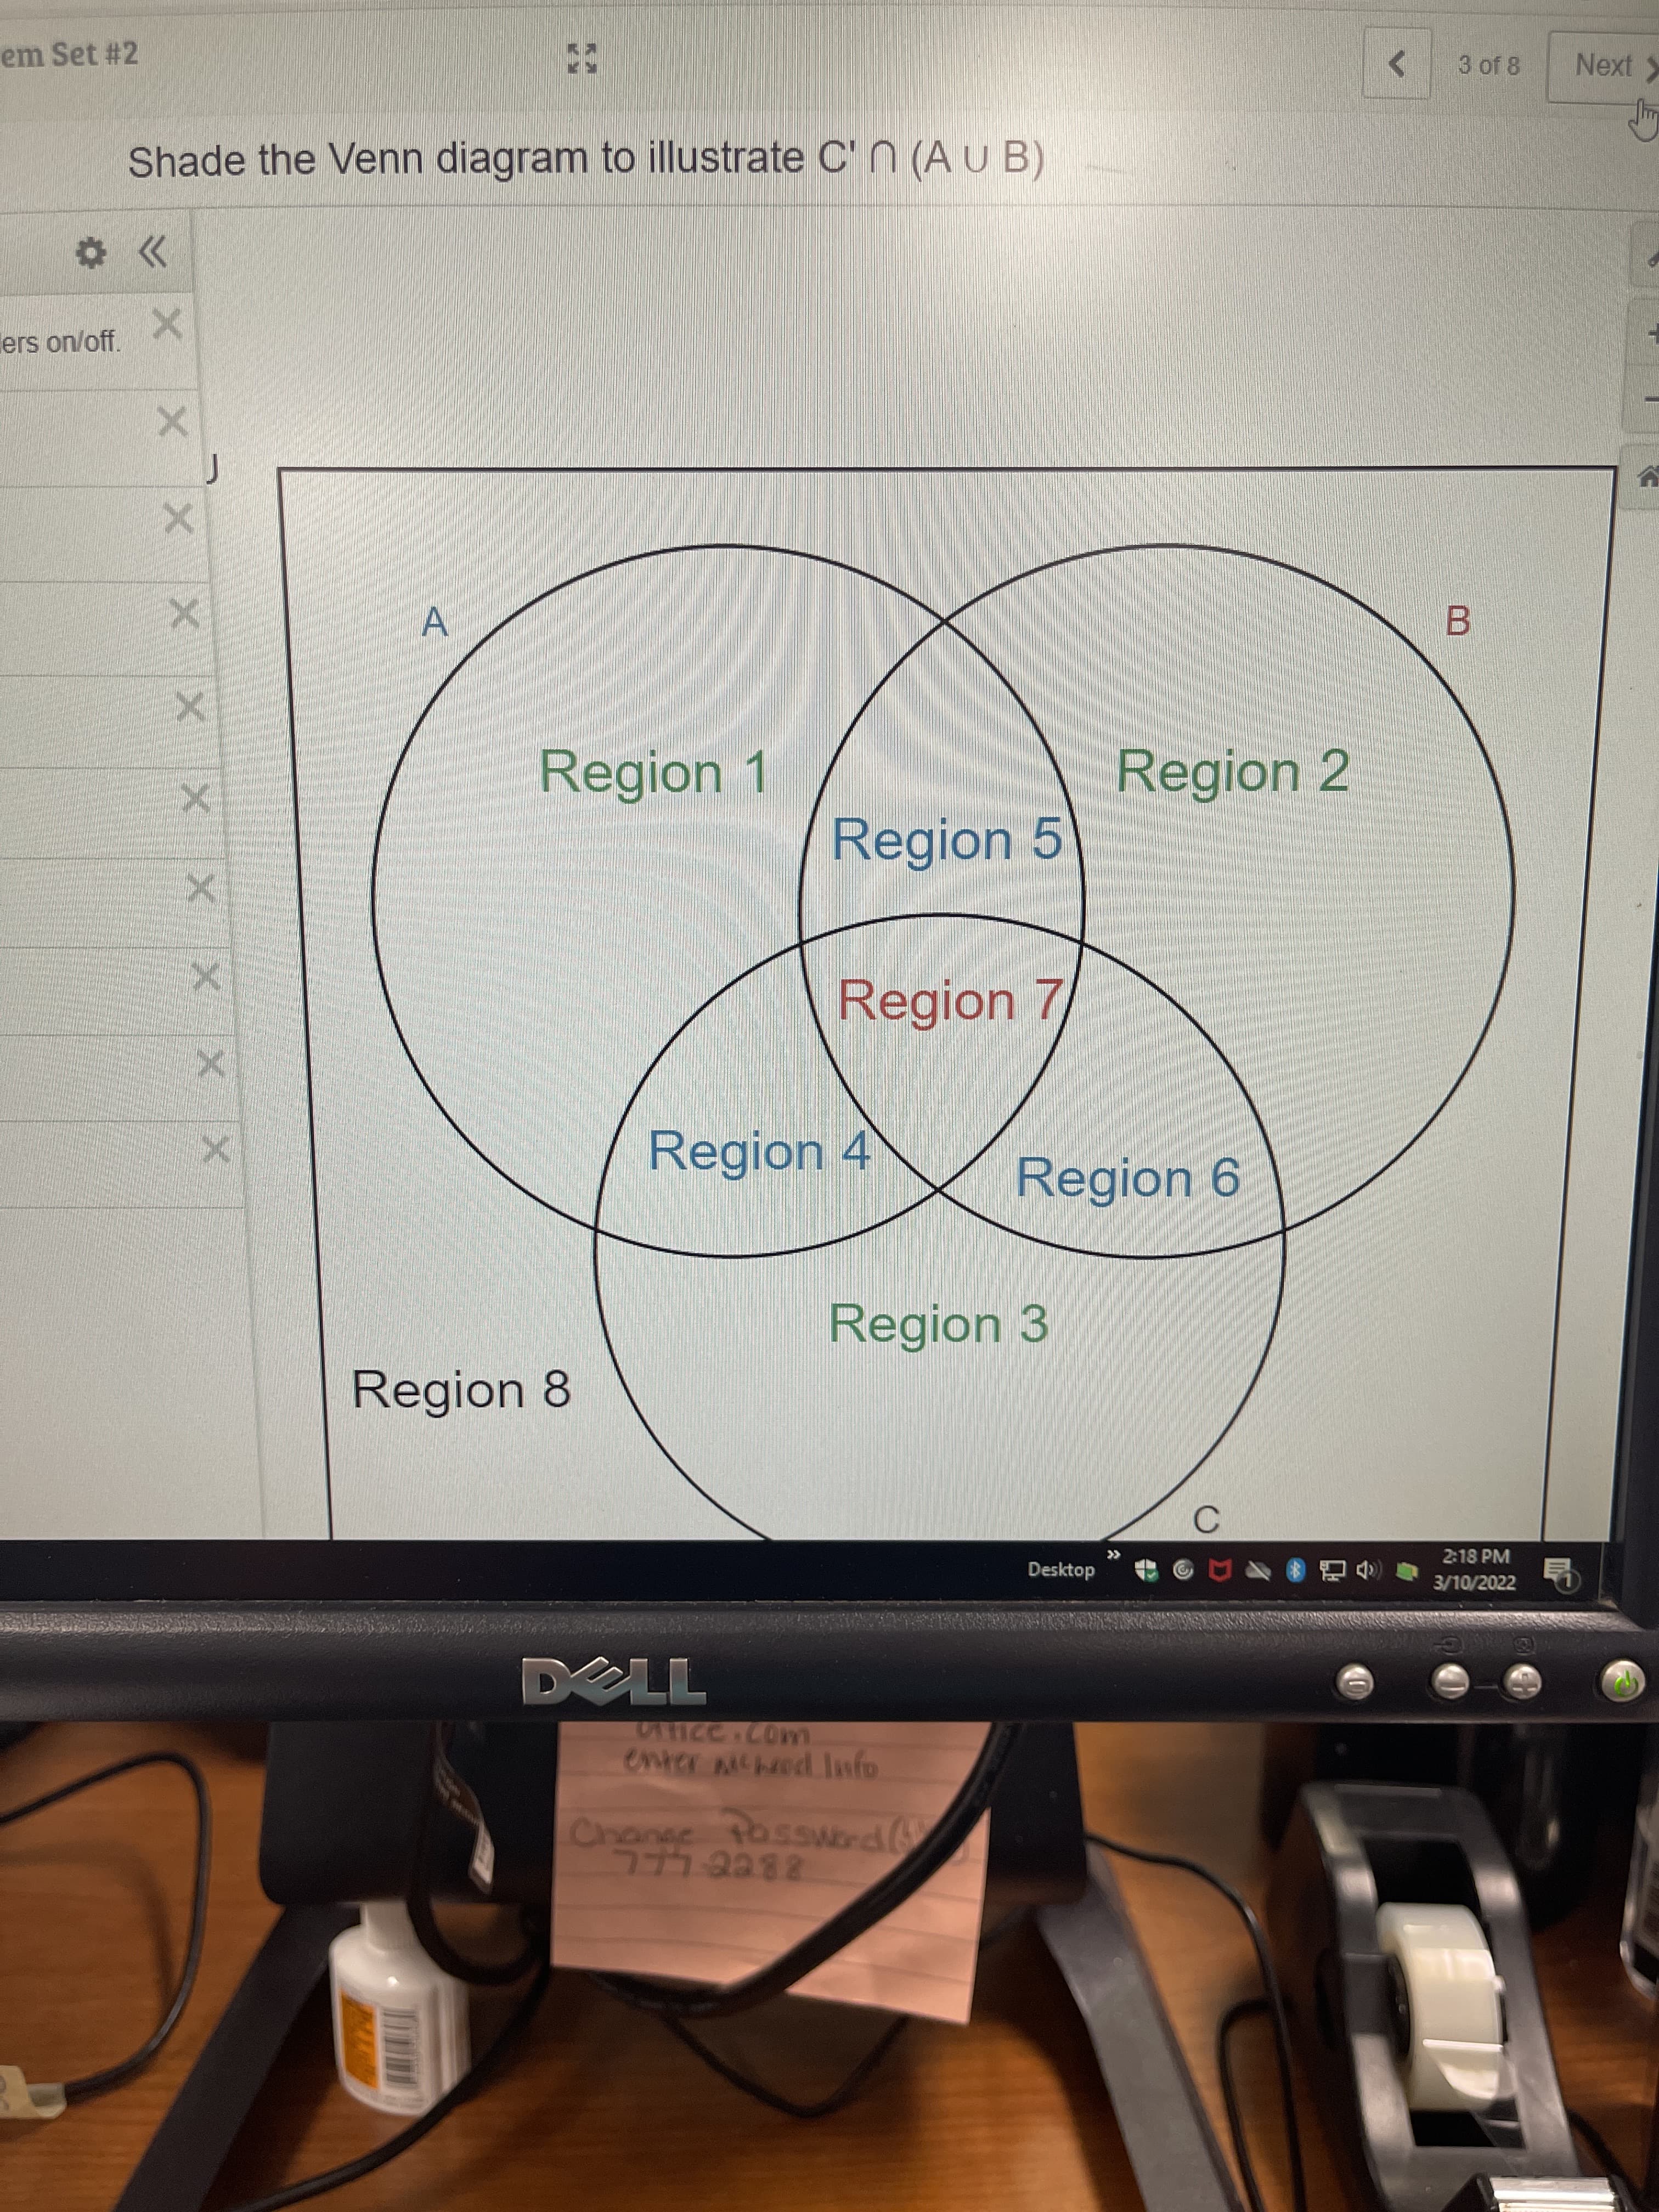 em Set #2
<>
3 of 8
Next
Shade the Venn diagram to illustrate C' N (A U B)
ers on/off.
Region 1
Region 2
Region 5
Region 7
Region 4
Region 6
Region 3
Region 8
2-18 PM
Desktop
3/10/2022
enter mcheod Info
Change tossWord (
777 2282
